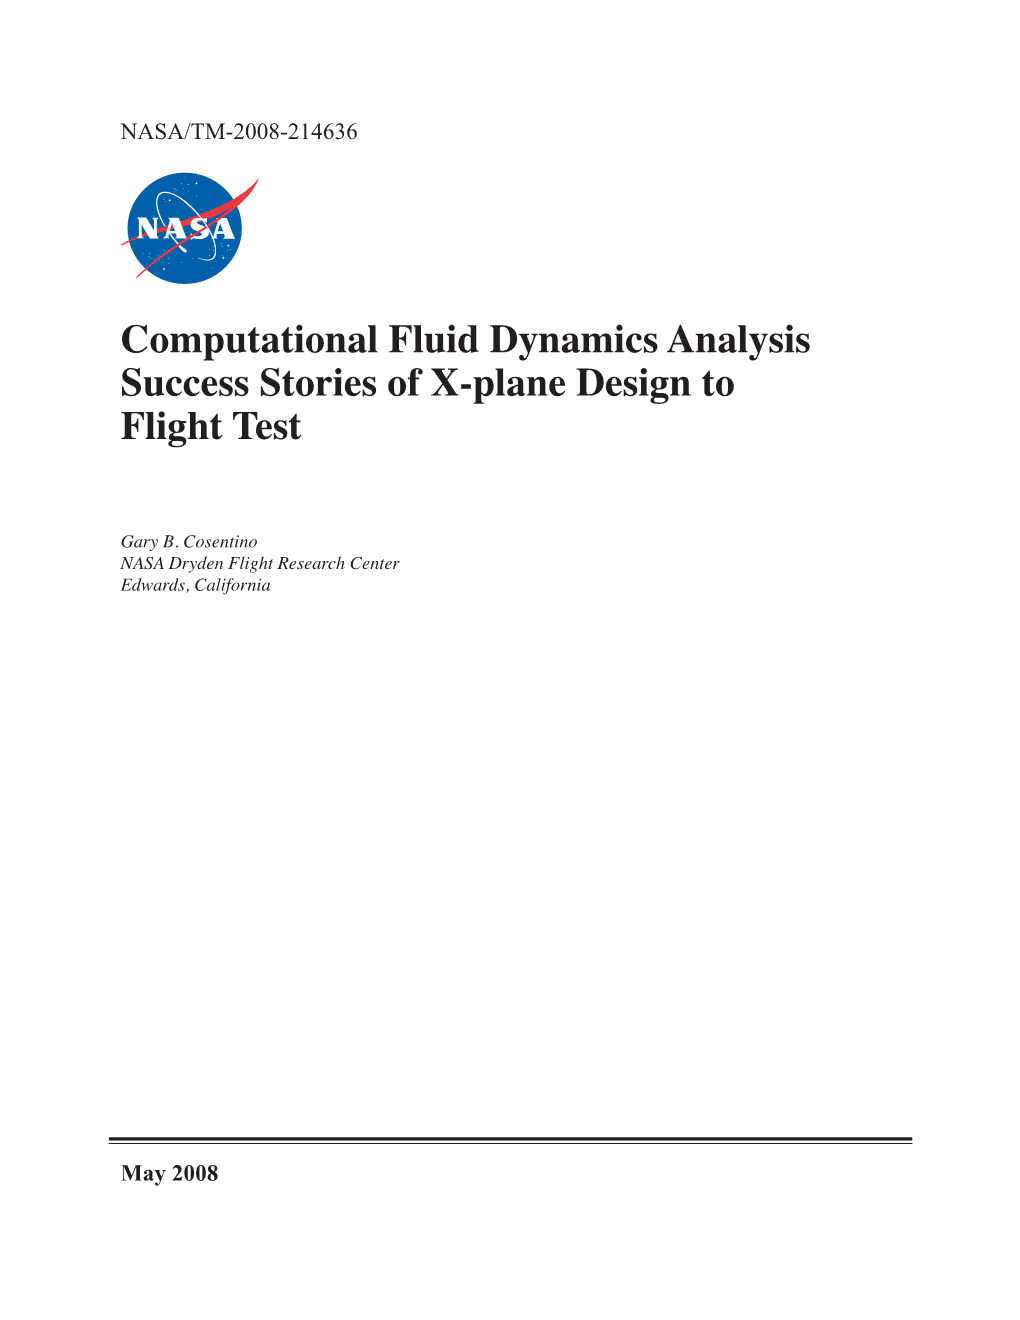 Computational Fluid Dynamics Analysis Success Stories of X-Plane Design to Flight Test